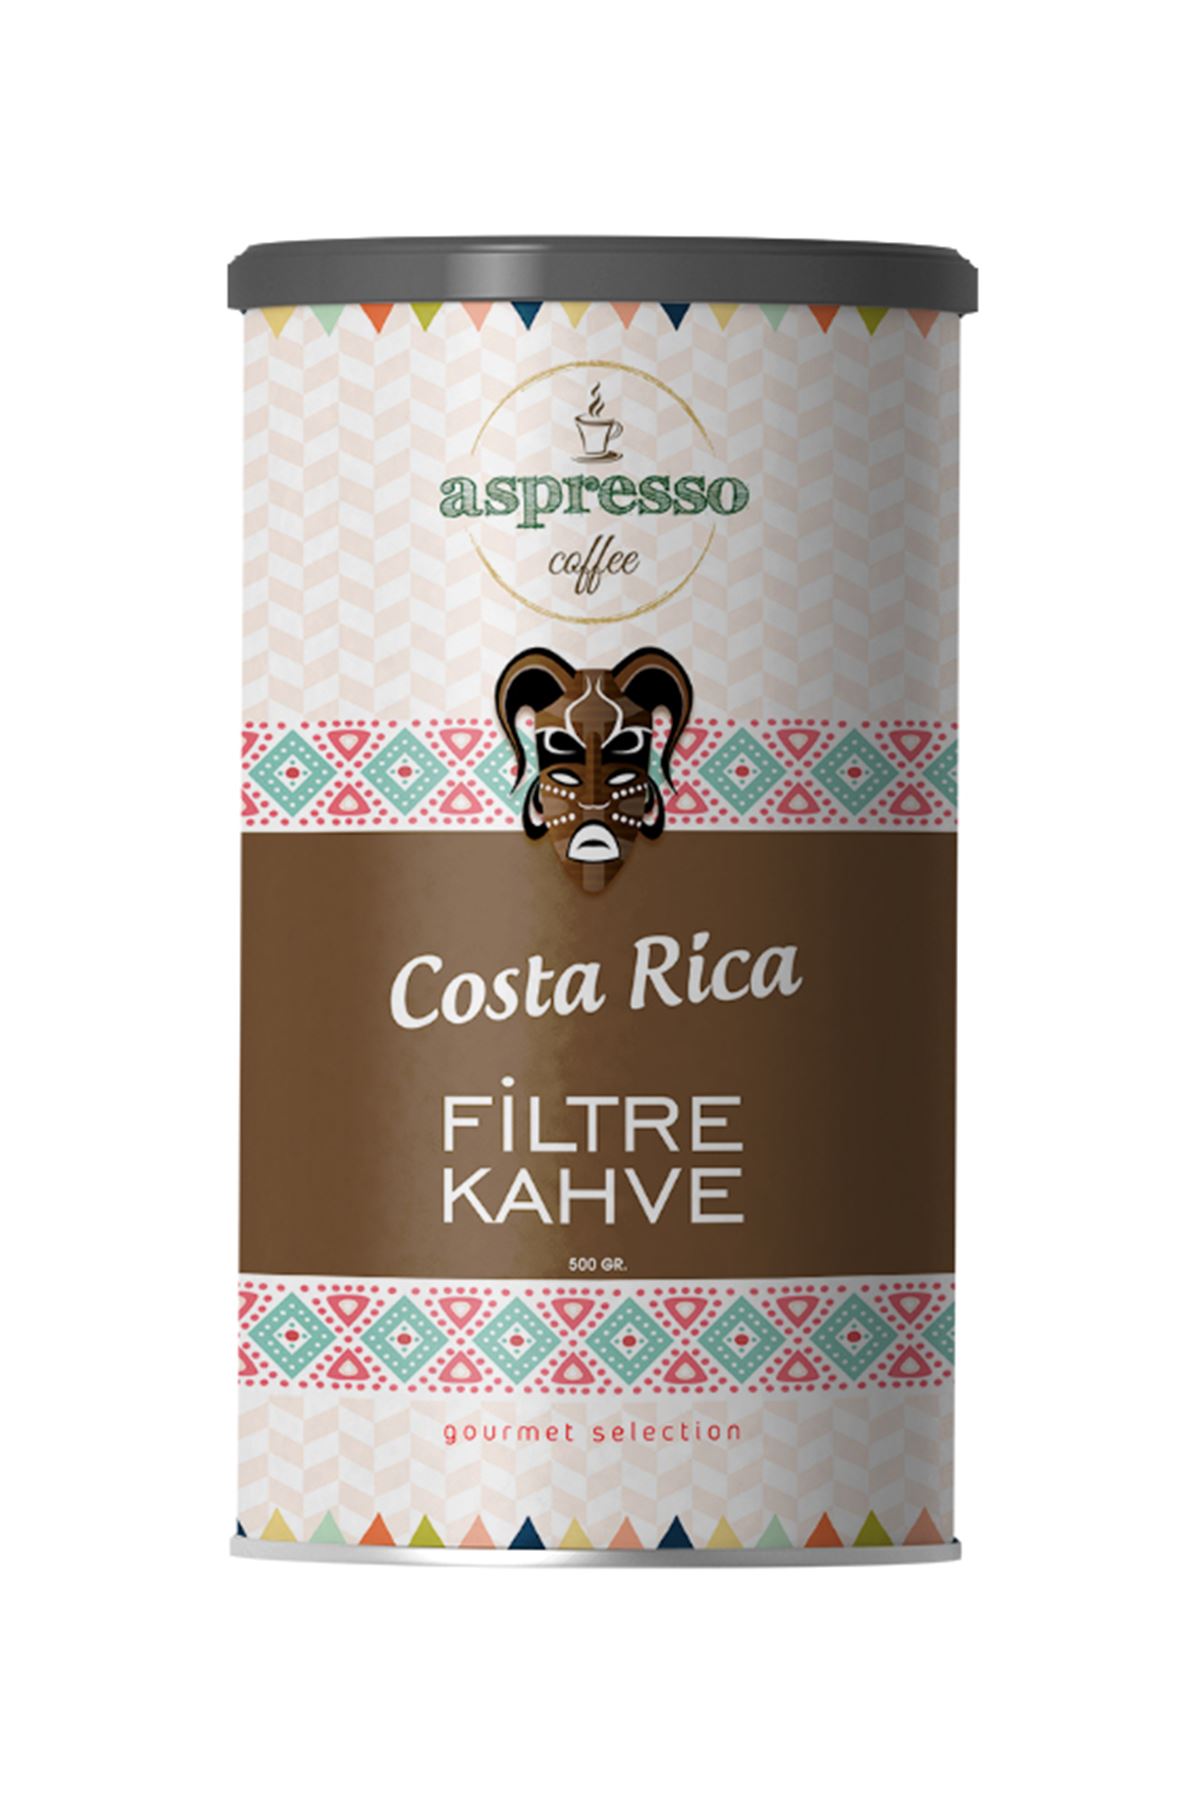 Costa Rica Filtre Kahve 500 gr.